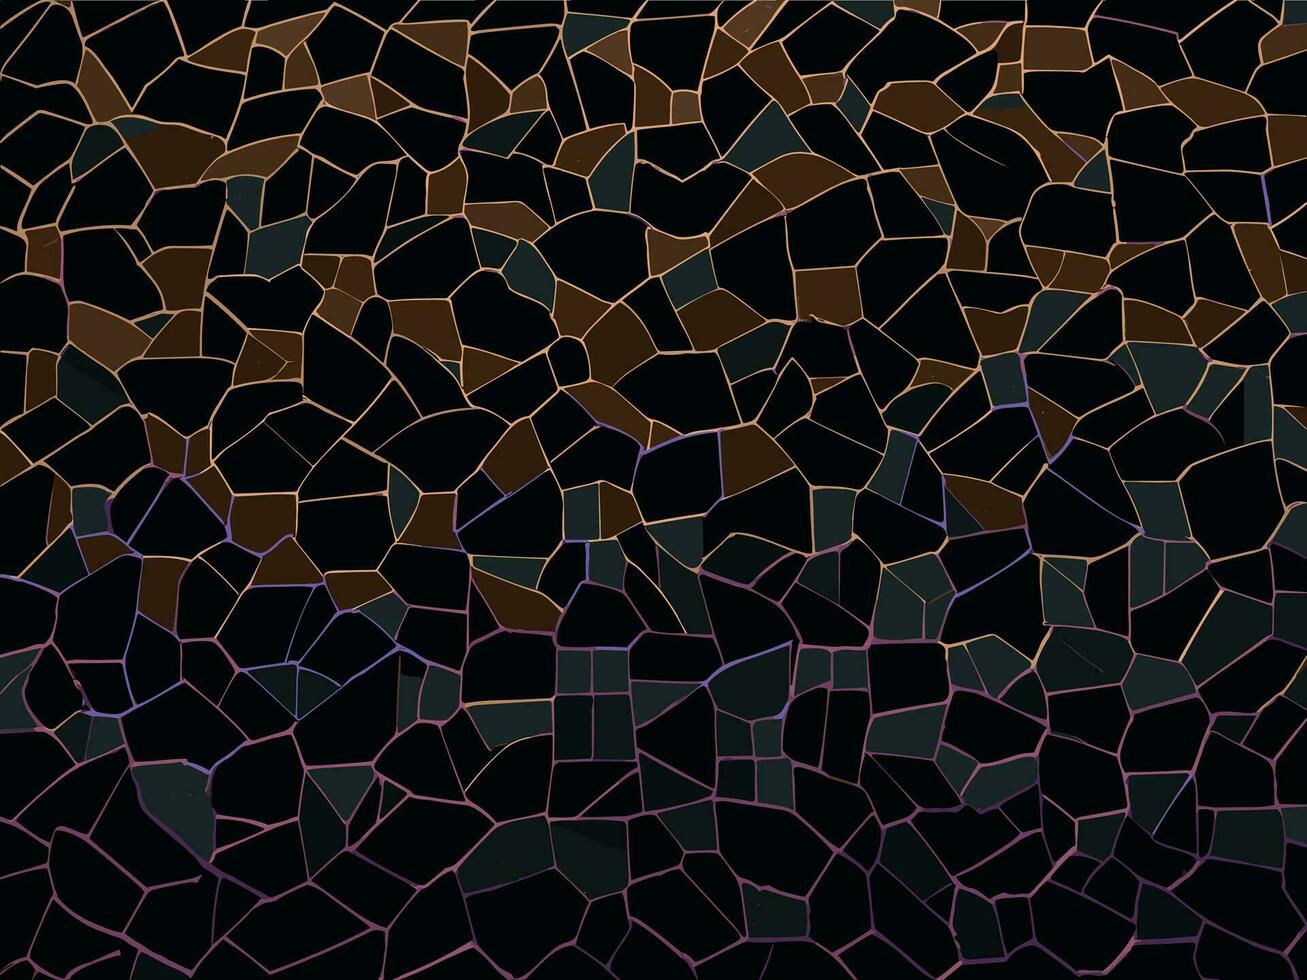 Broken glass mosaic on black background. Seamless pattern vector